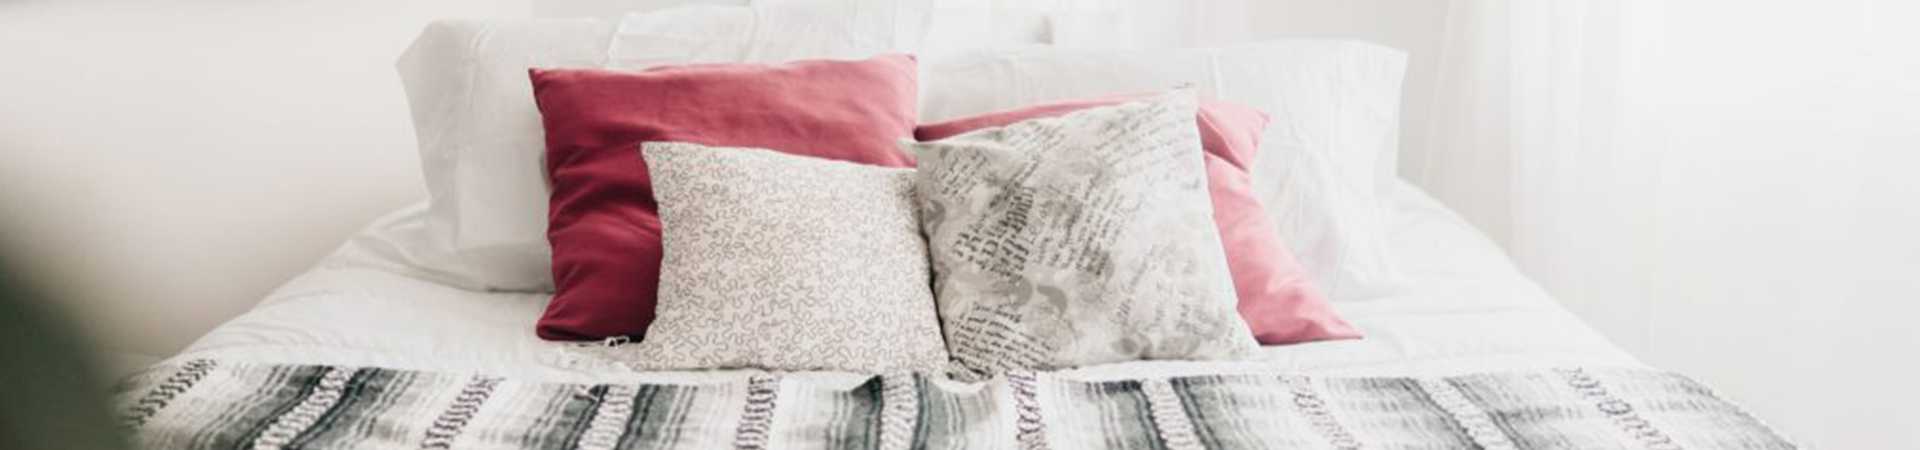 bedding-pillows-and-linen